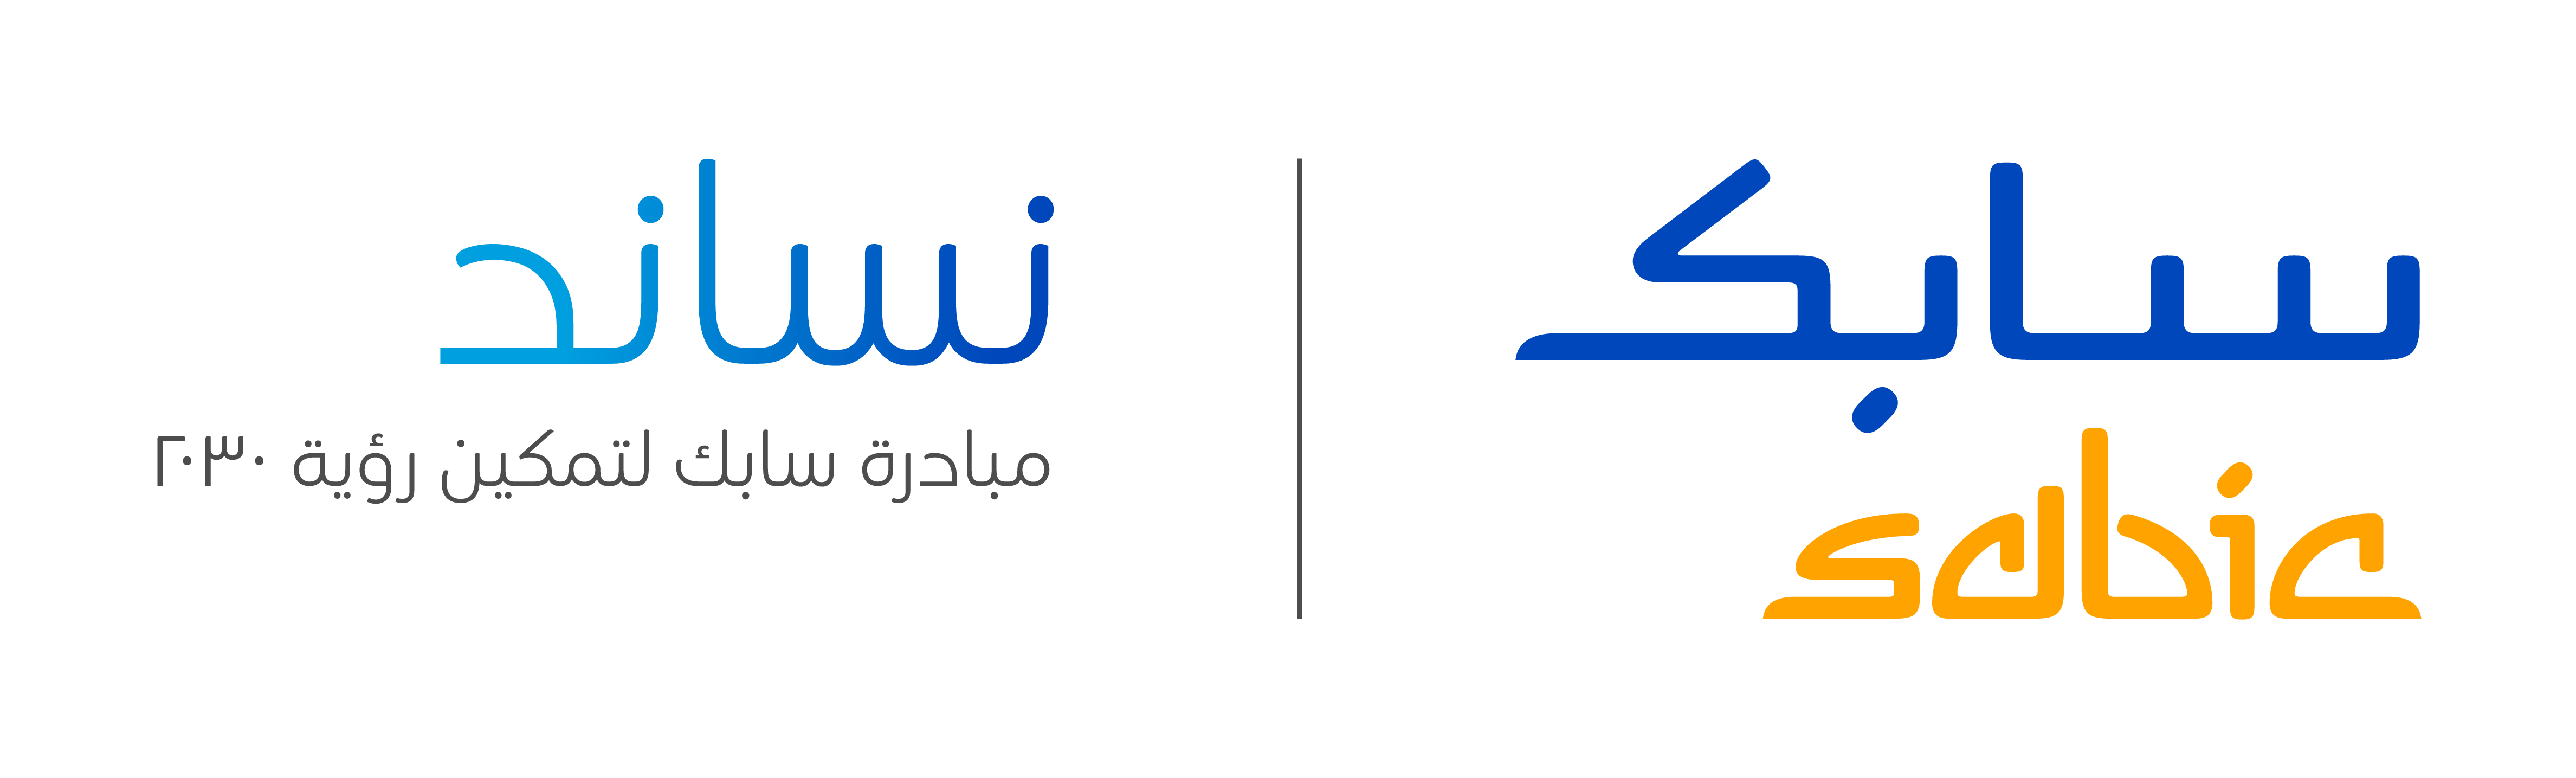 NUSANED SABIC External Sponcership Logo 01